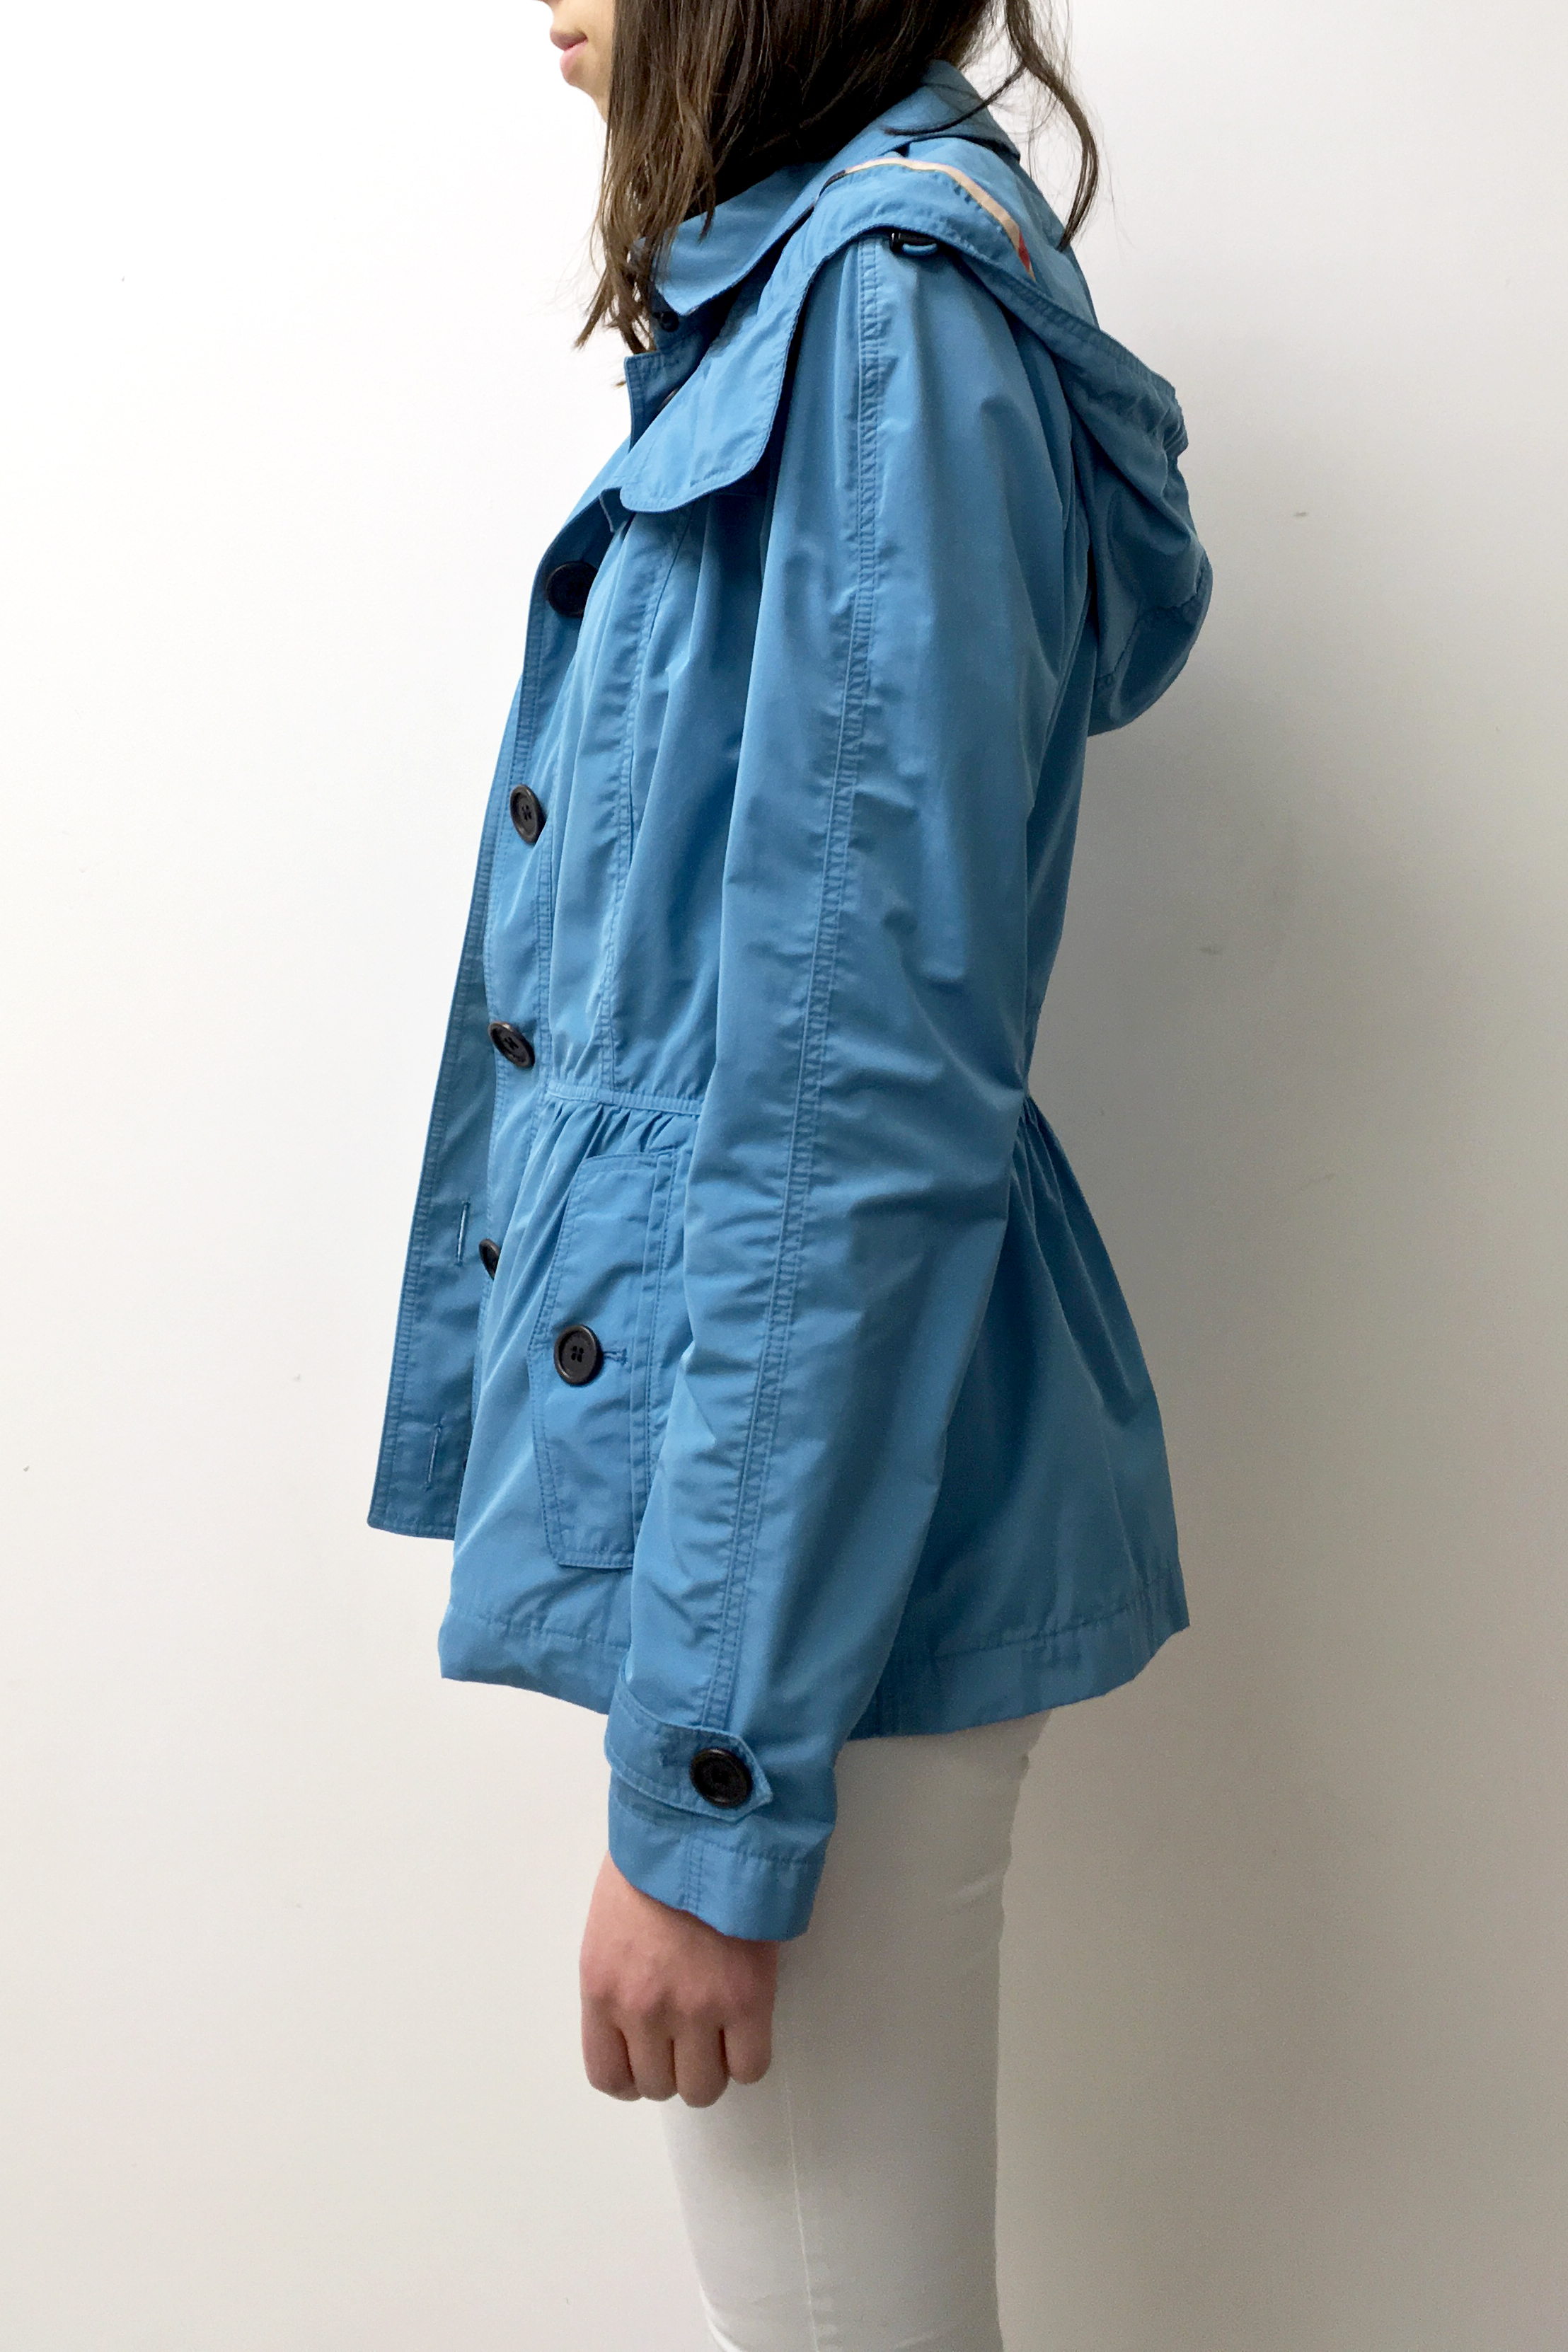 Burberry rain jacket / coat 